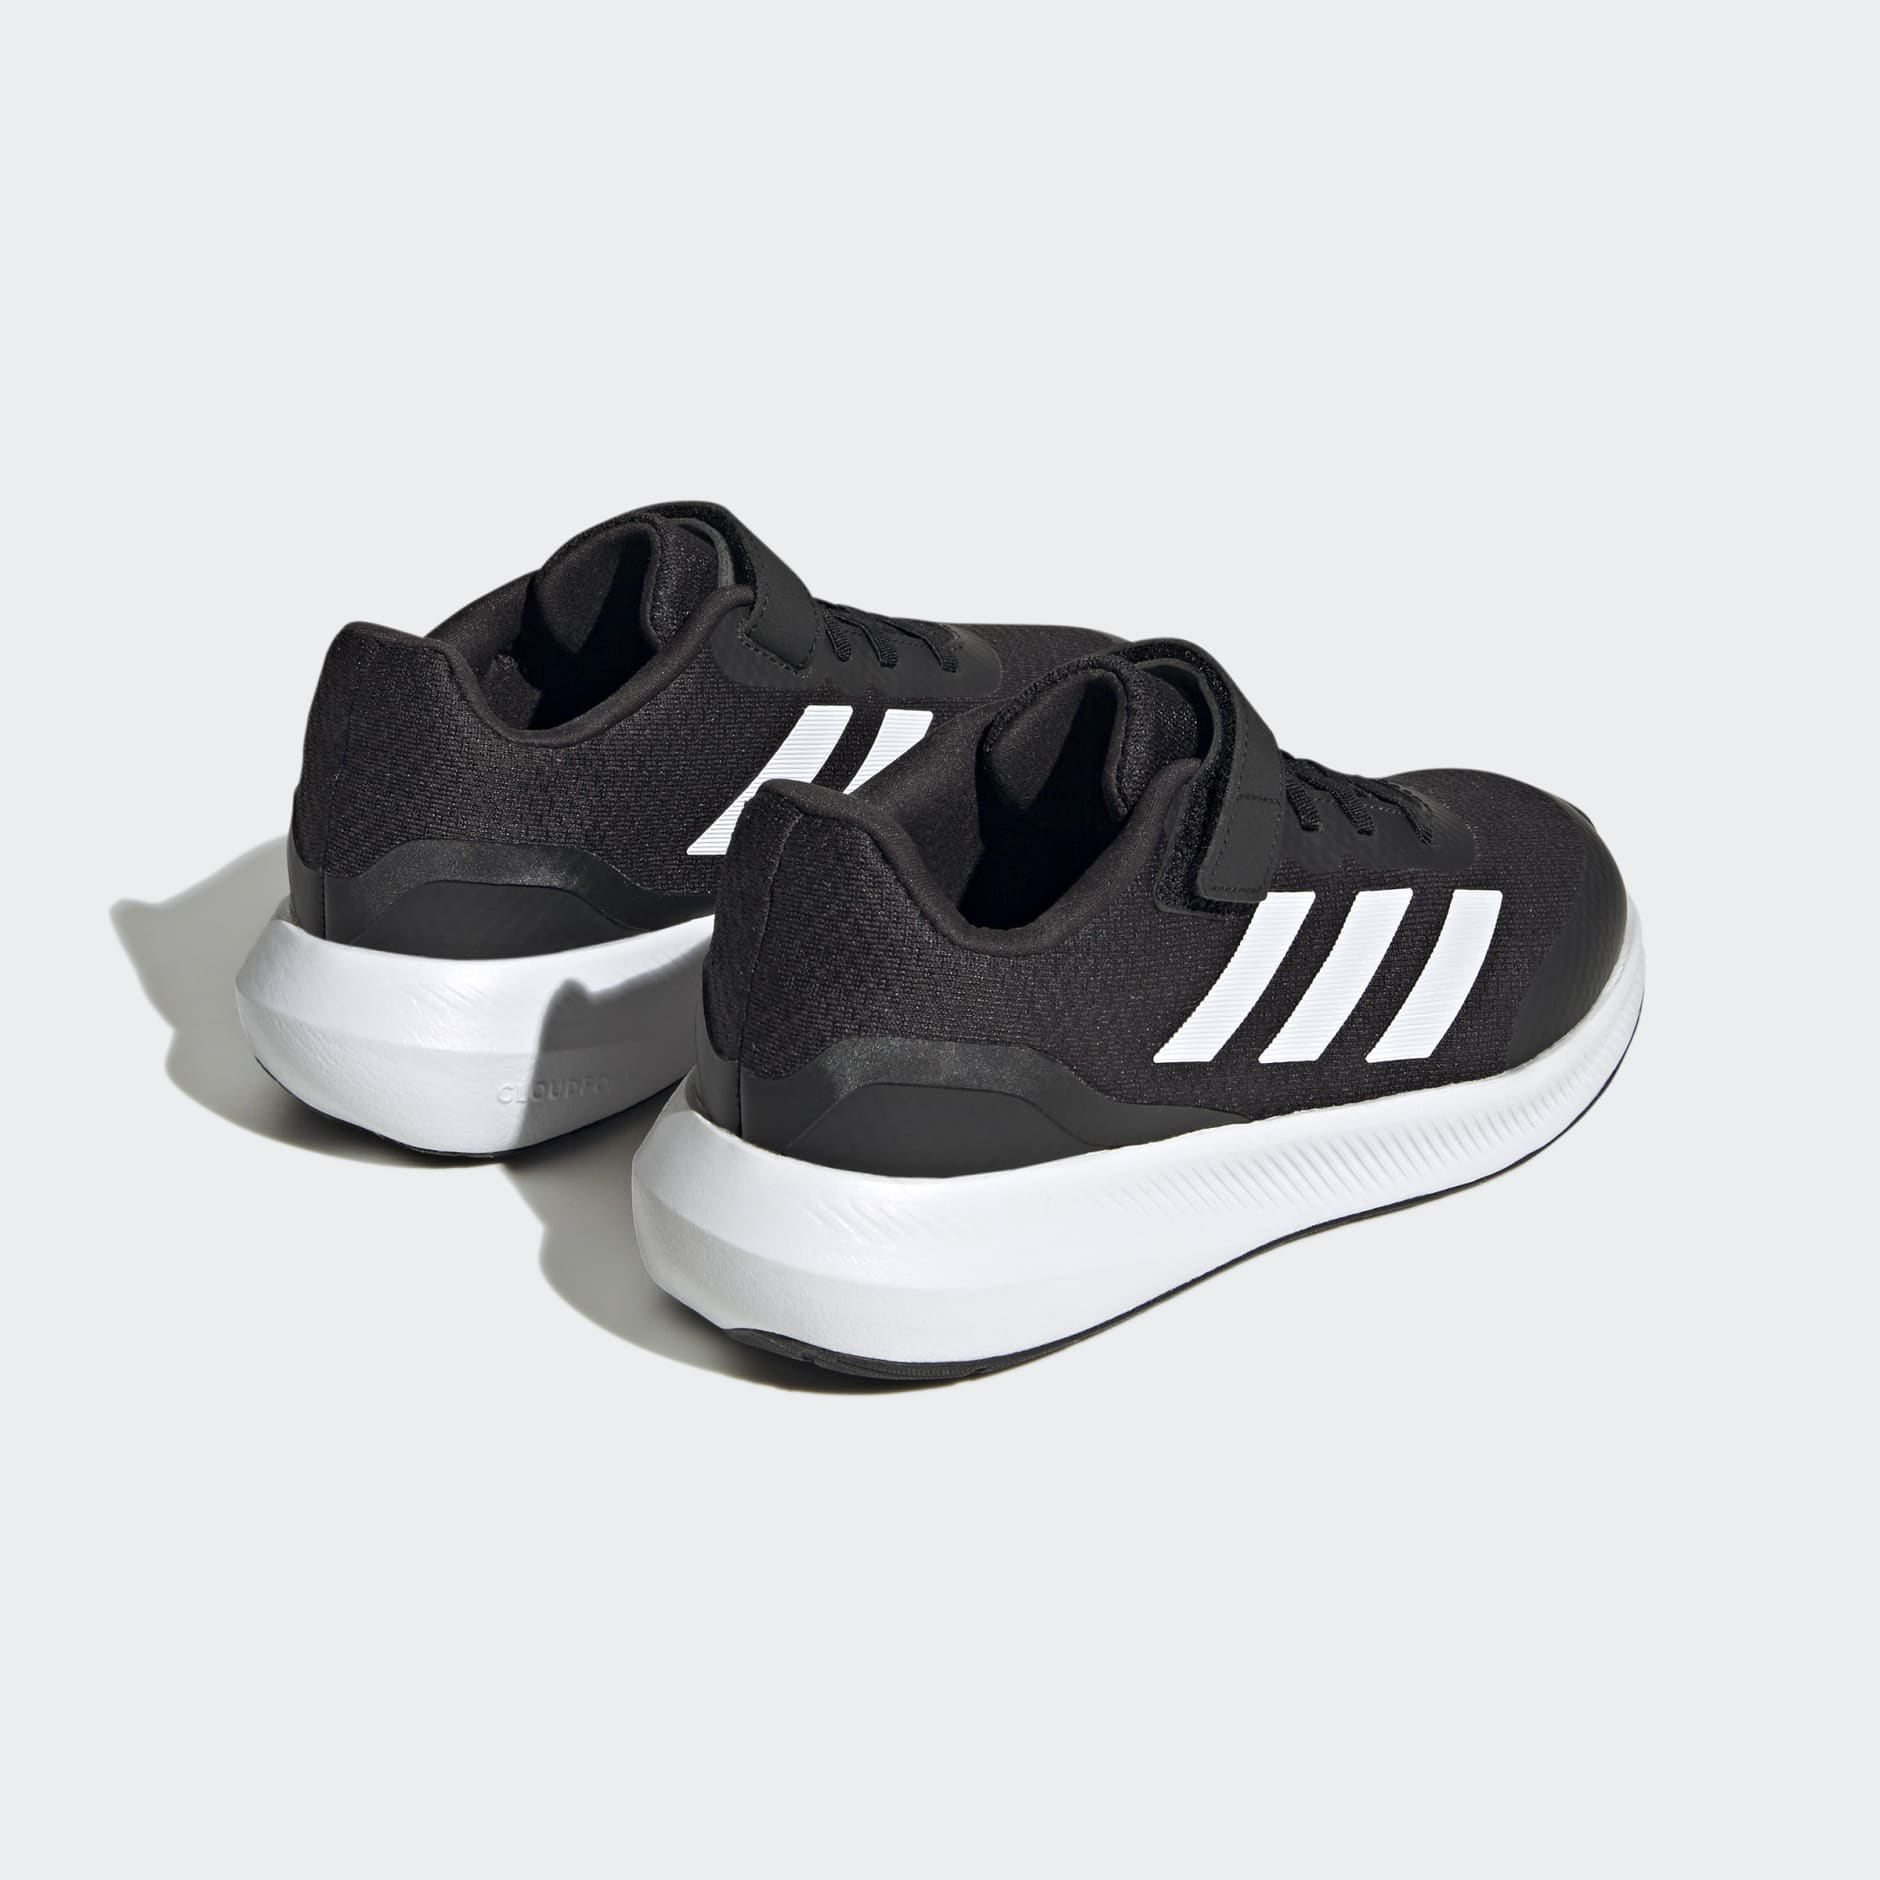 adidas RunFalcon | Strap Lace - Elastic adidas Shoes Black Top 3.0 GH